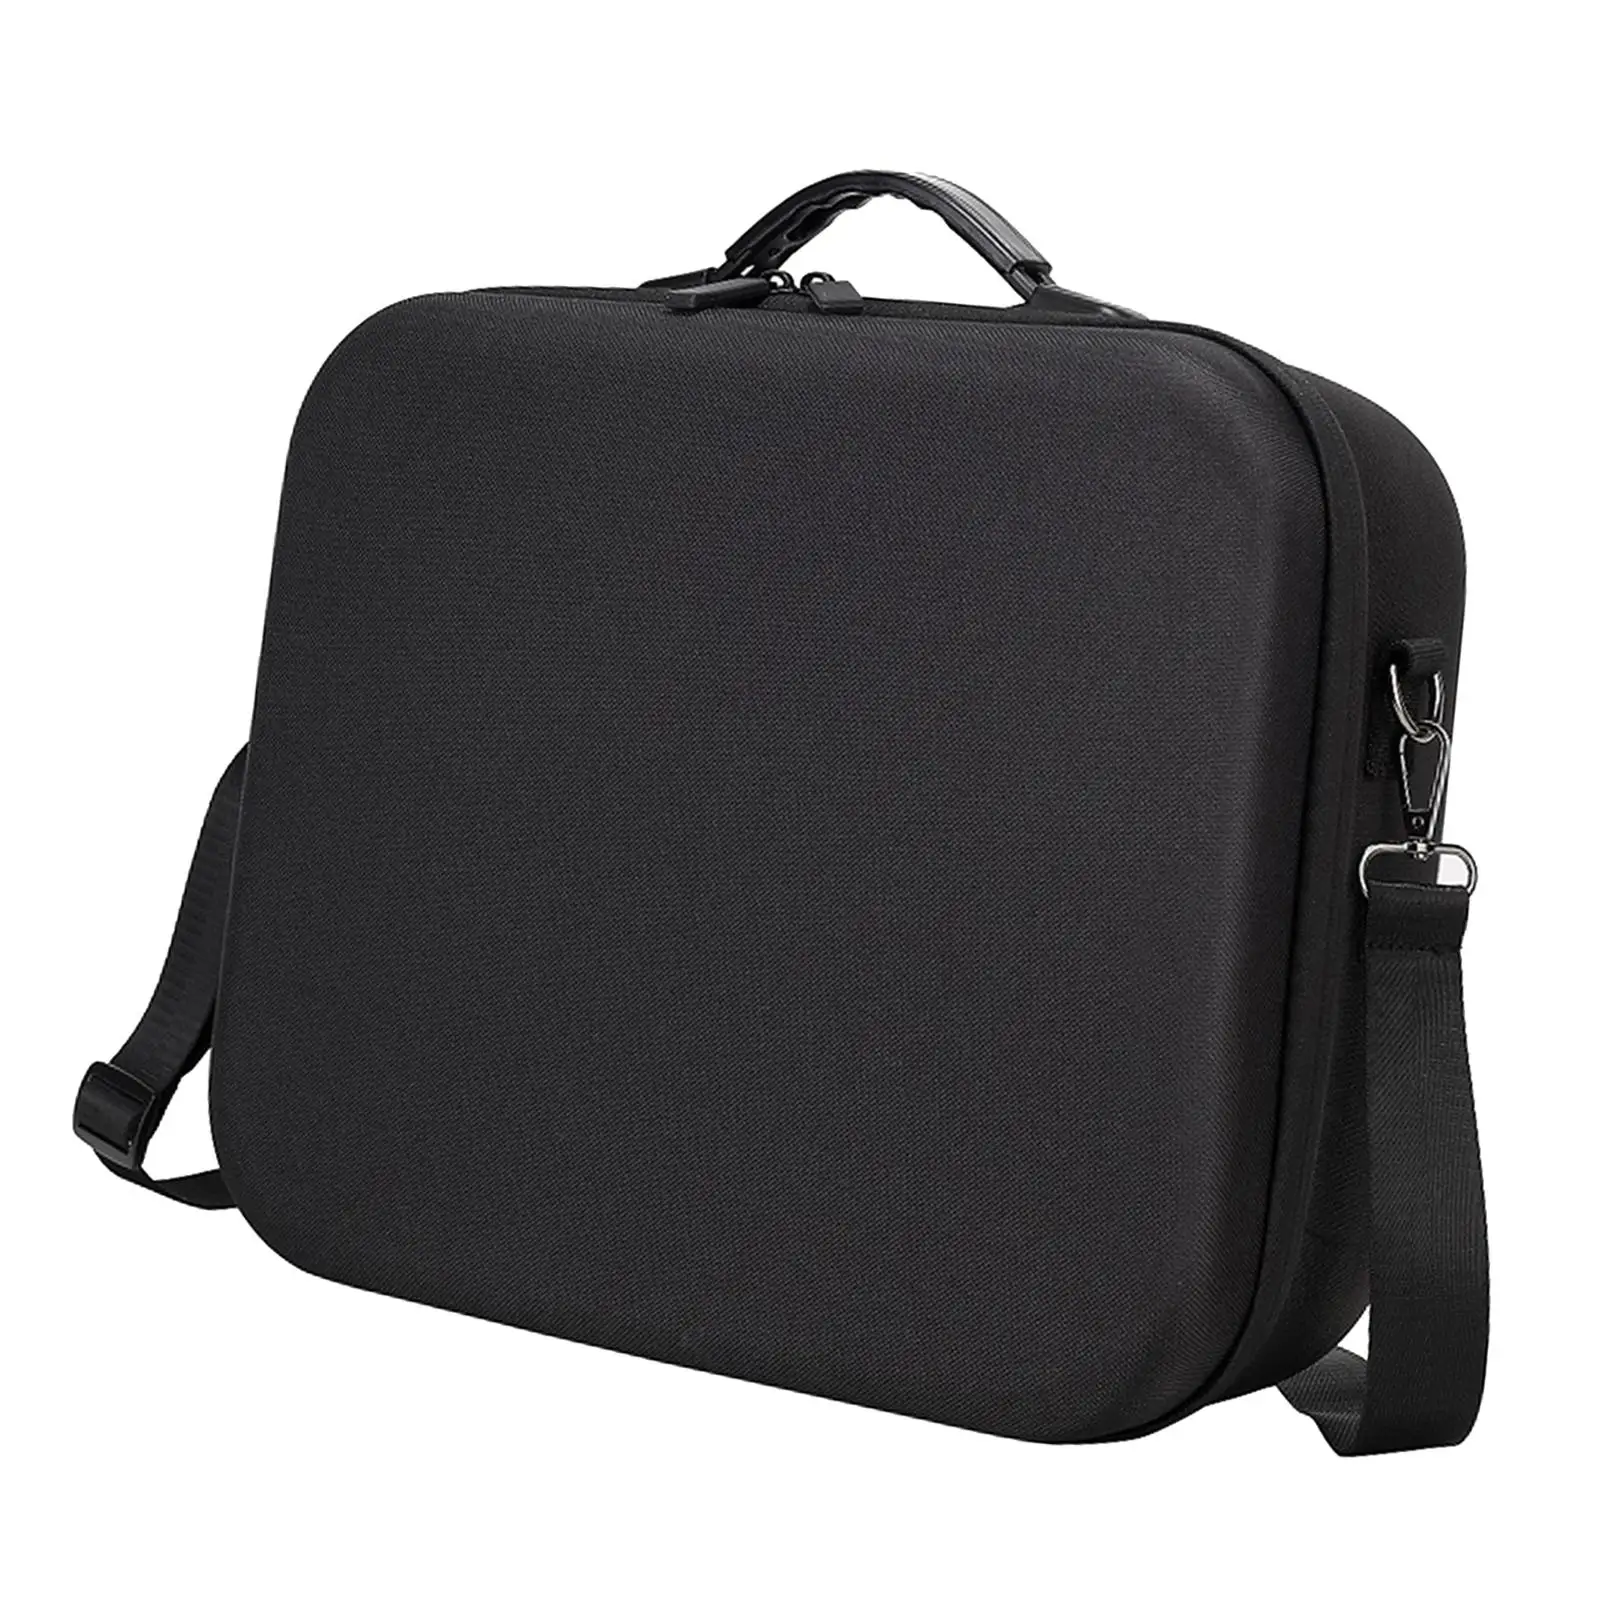 Nylon & EVA Carrying Case for   Adjustable Strap Efficient Protective Shoulder Bag Comfortable Handle Handbag for Adults Gifts